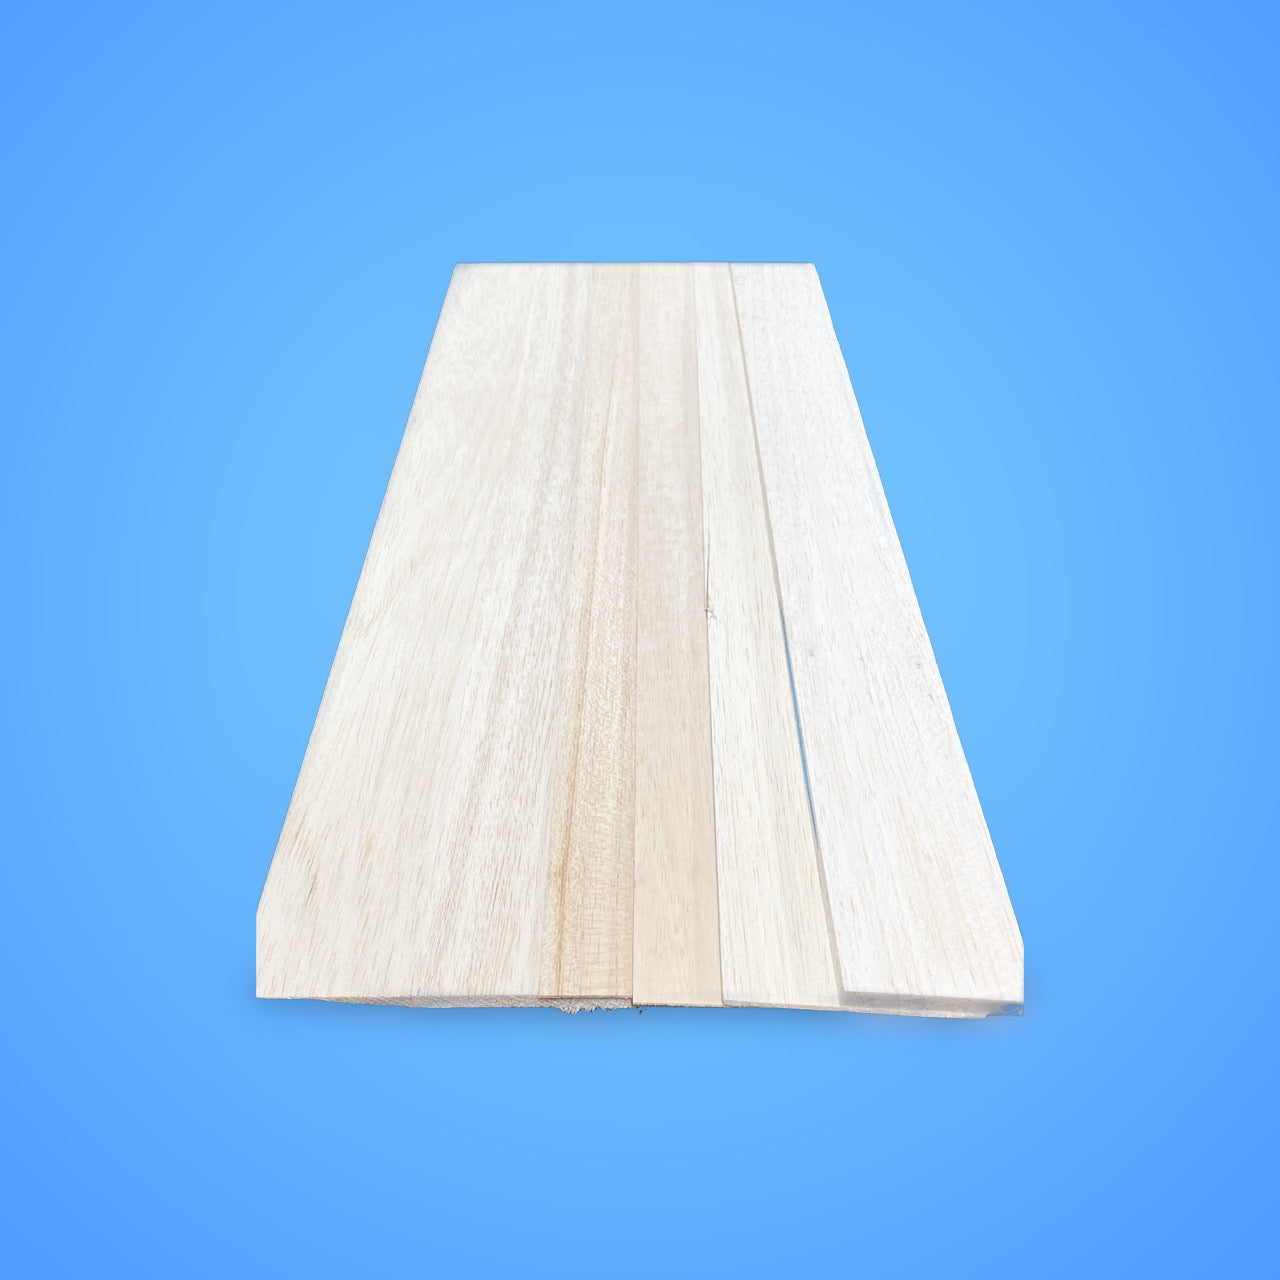 1/8 x 3 x 36 Aero Light Balsa Wood Sheets